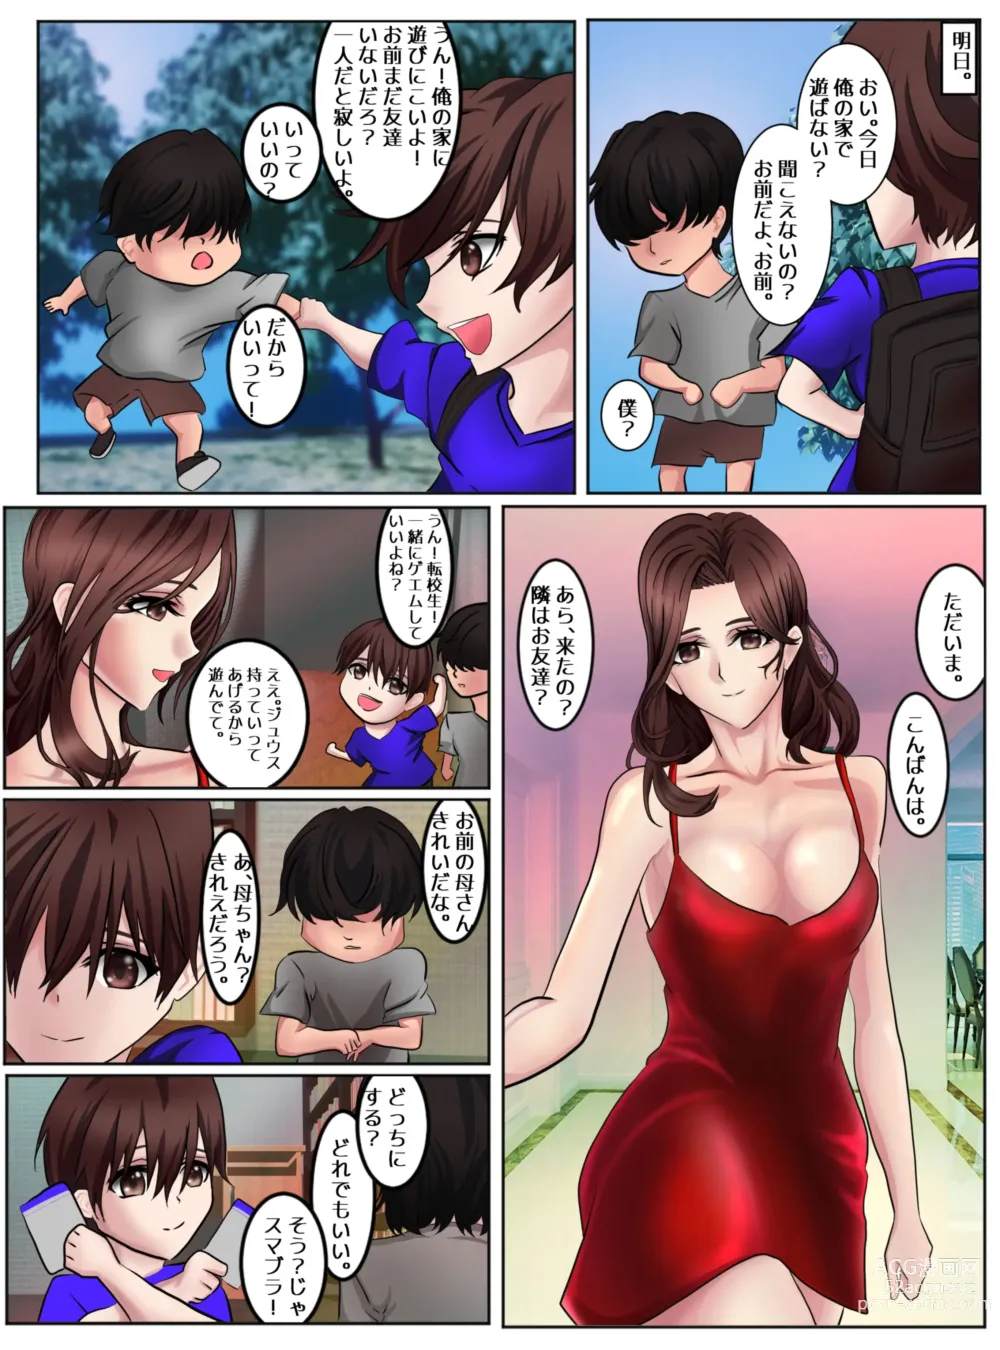 Page 2 of doujinshi Behind story